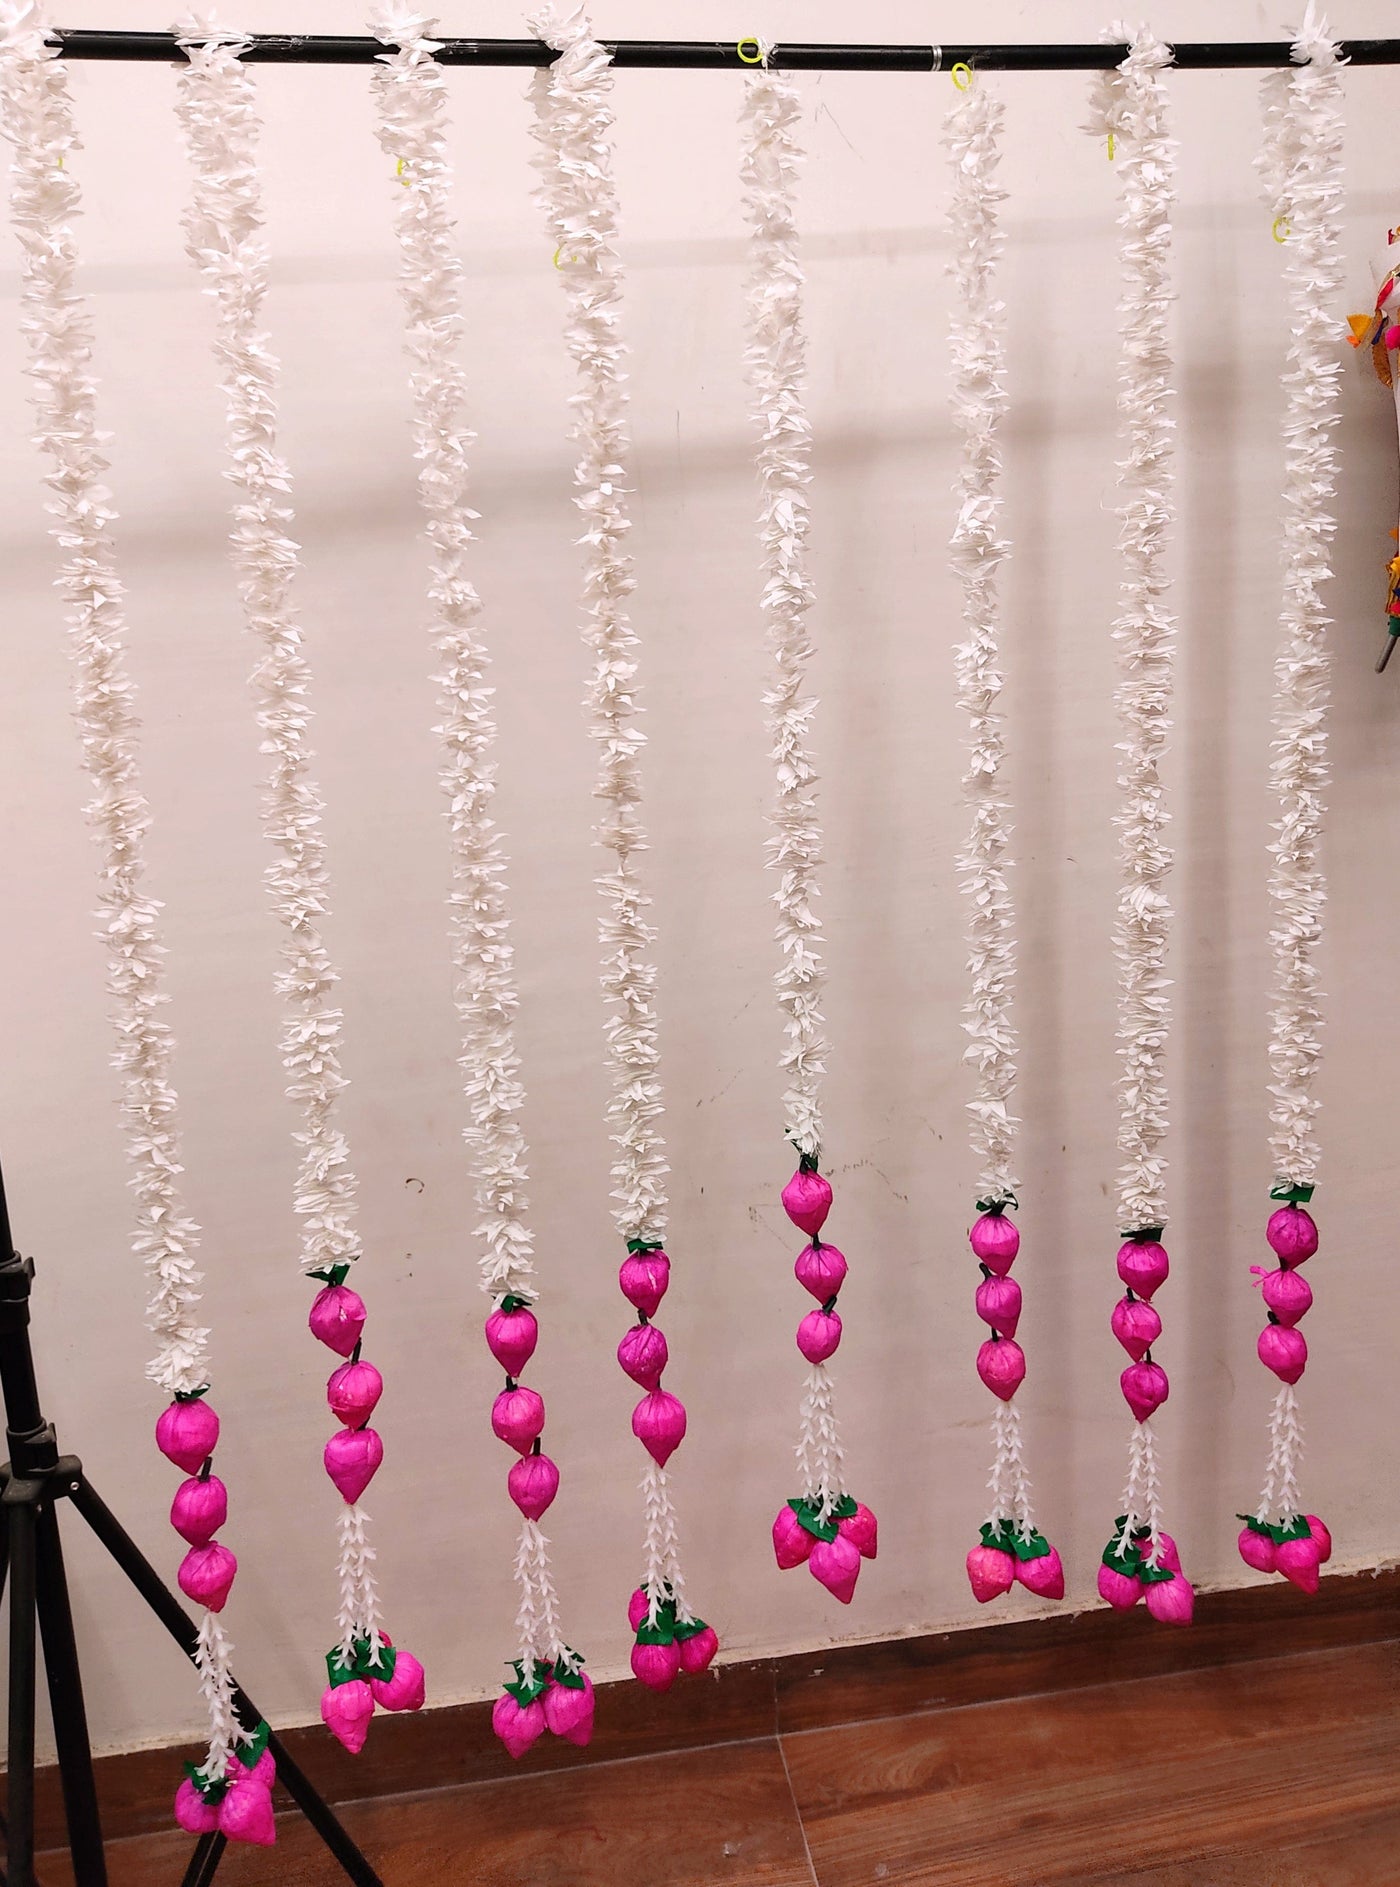 1000 Rs each packet of 10/pcs , on buying minimum 8 packets jasmine hangings 10 LAMANSH® 5 Feet Pink Lotus Buds Jasmine Wall Hangings for Festival decoration | Pooja & Mandir Decor Hangings (Pack of 10)